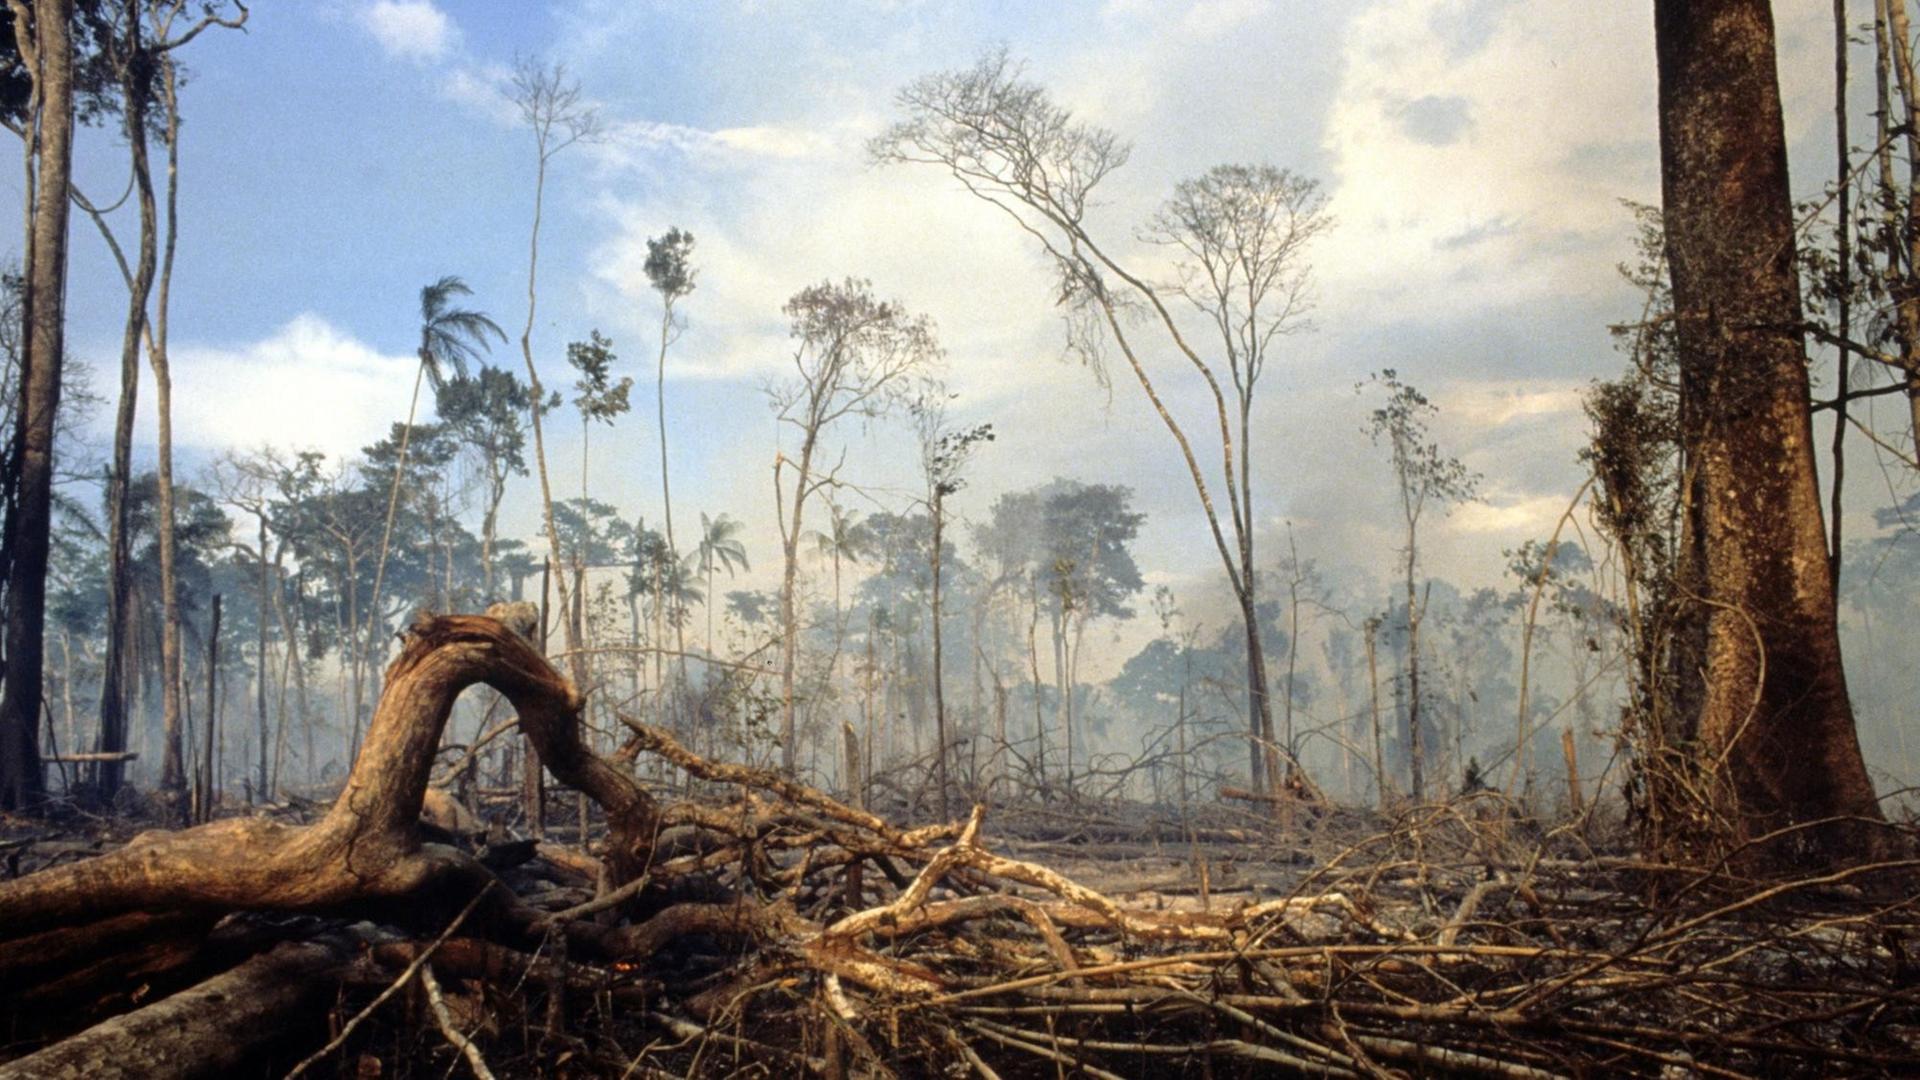 Brandrodung in Regenwald Brasiliens